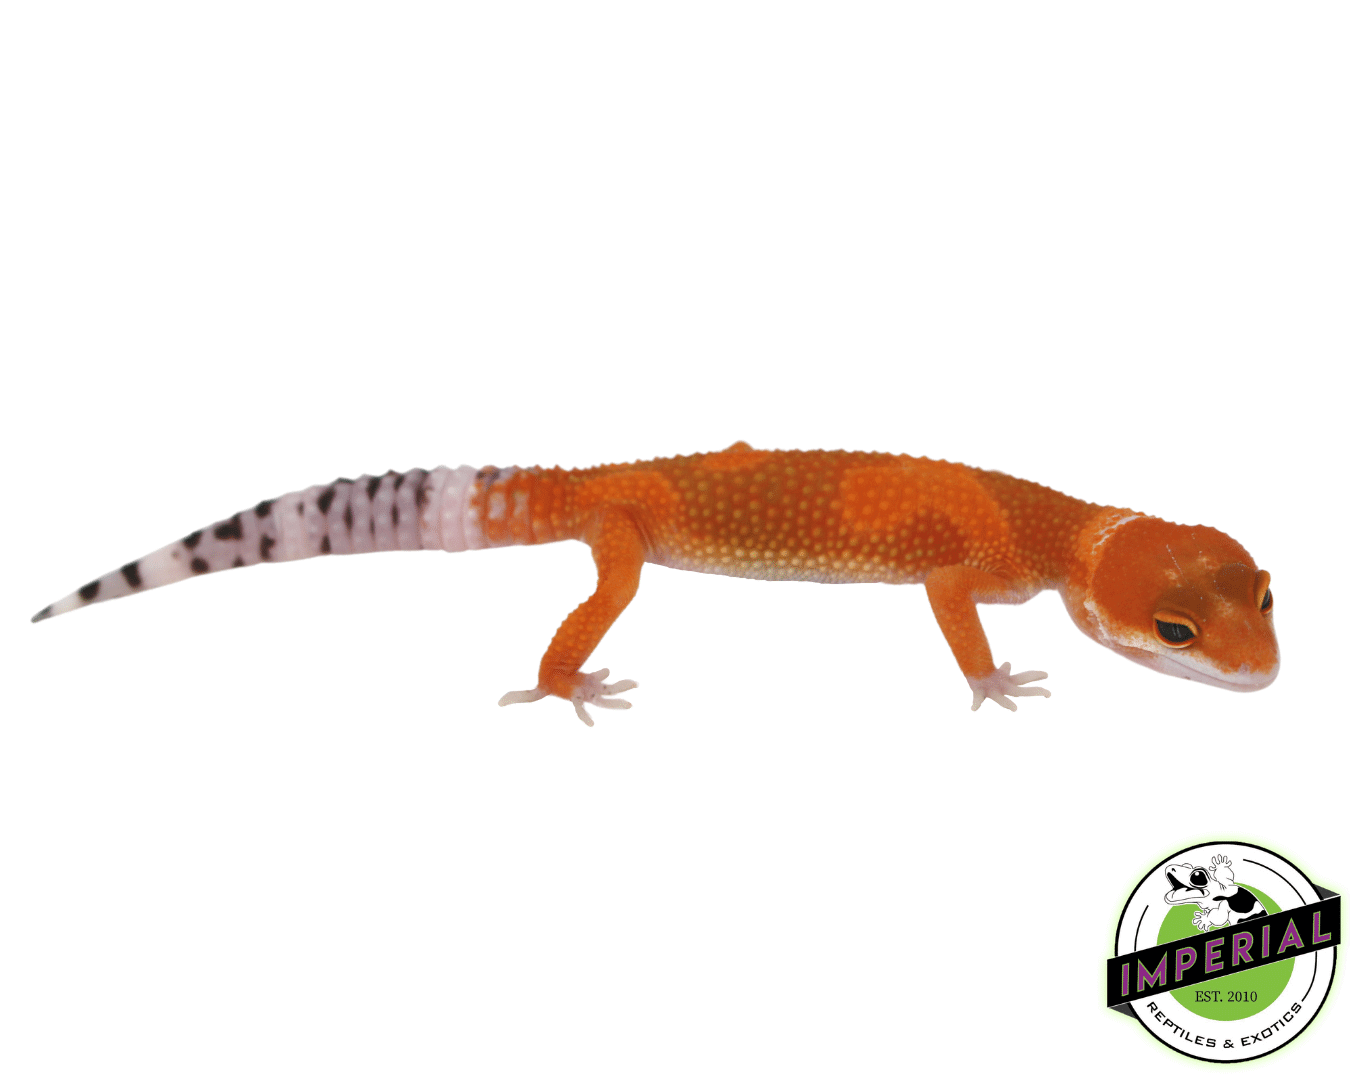 og tangerine leopard gecko for sale, buy reptiles online